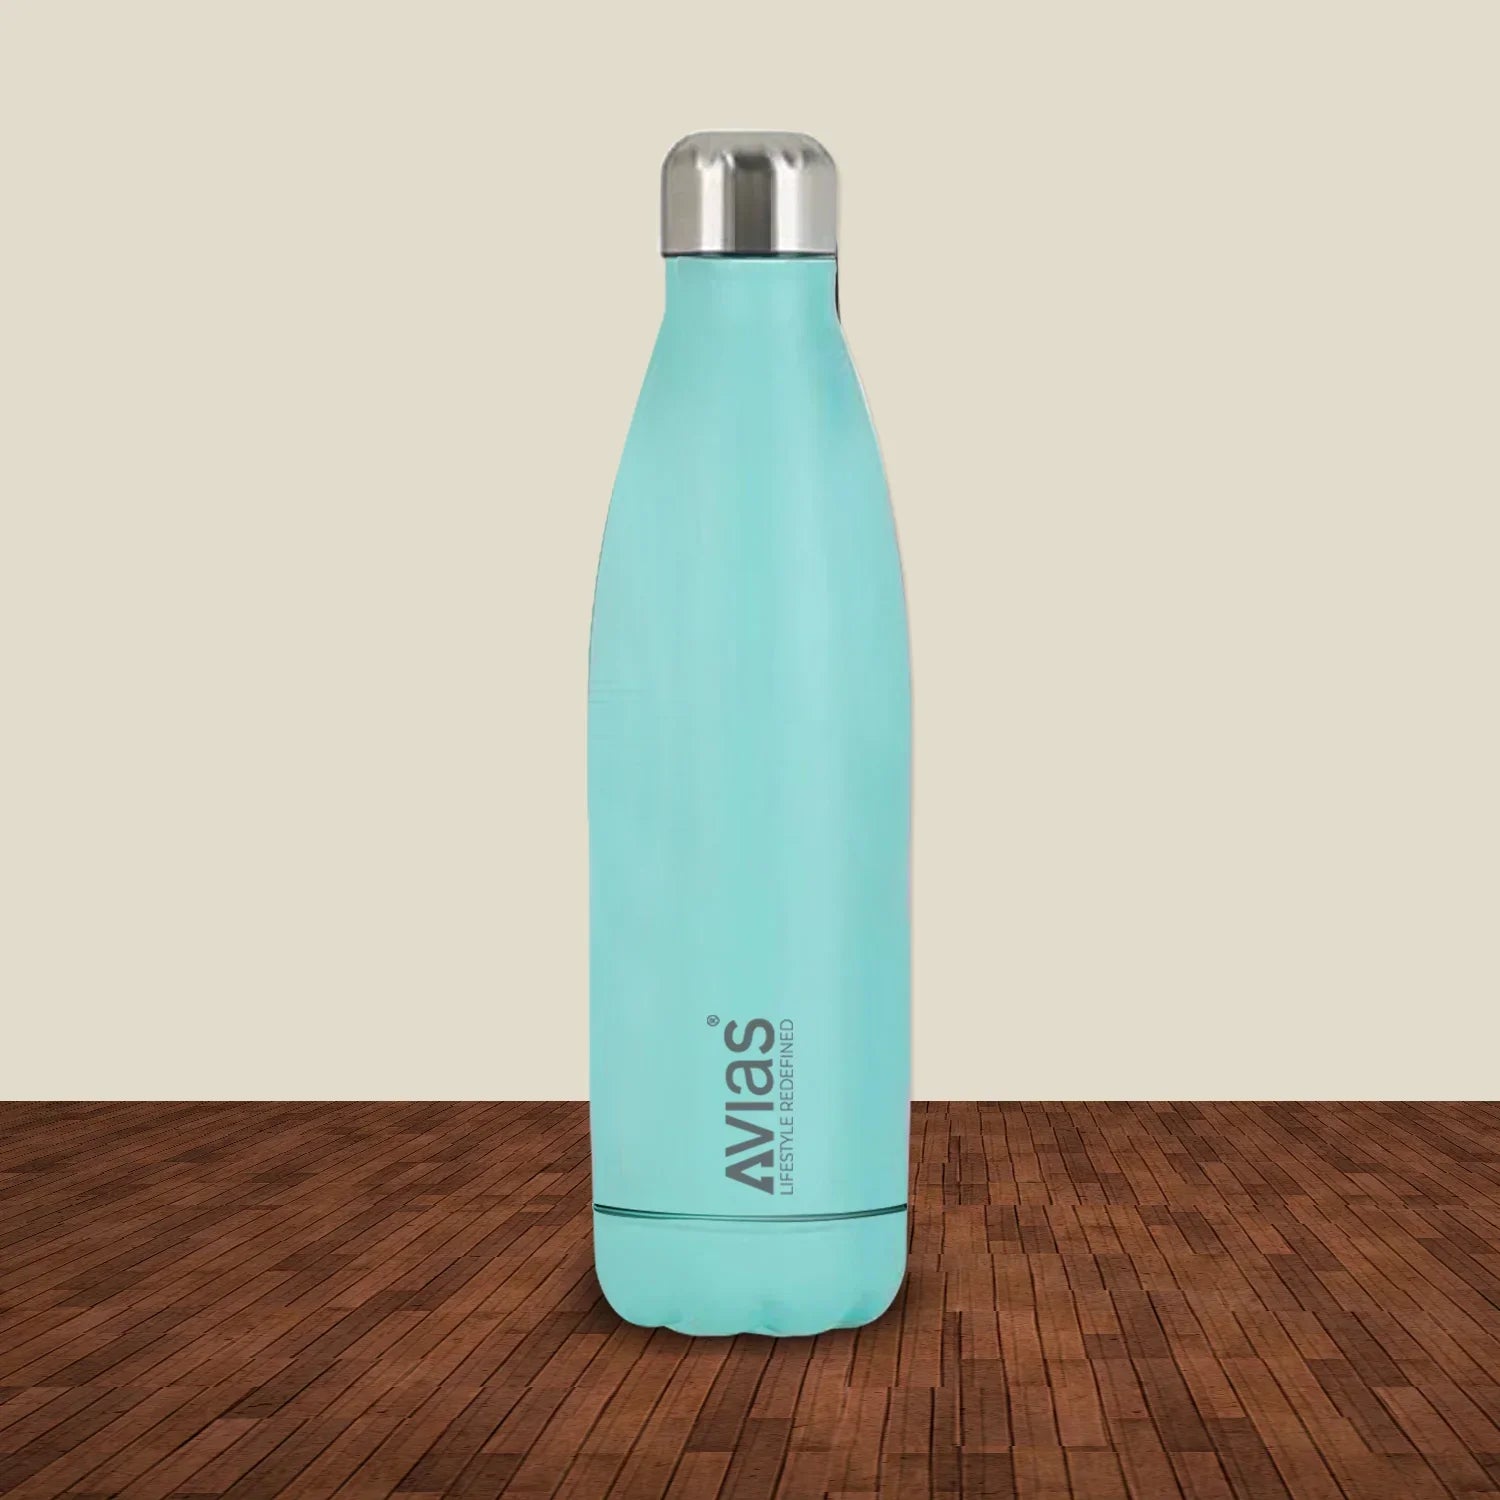 Evita premium stainless steel Vacuum Insulated Flask Water Bottle - Blue